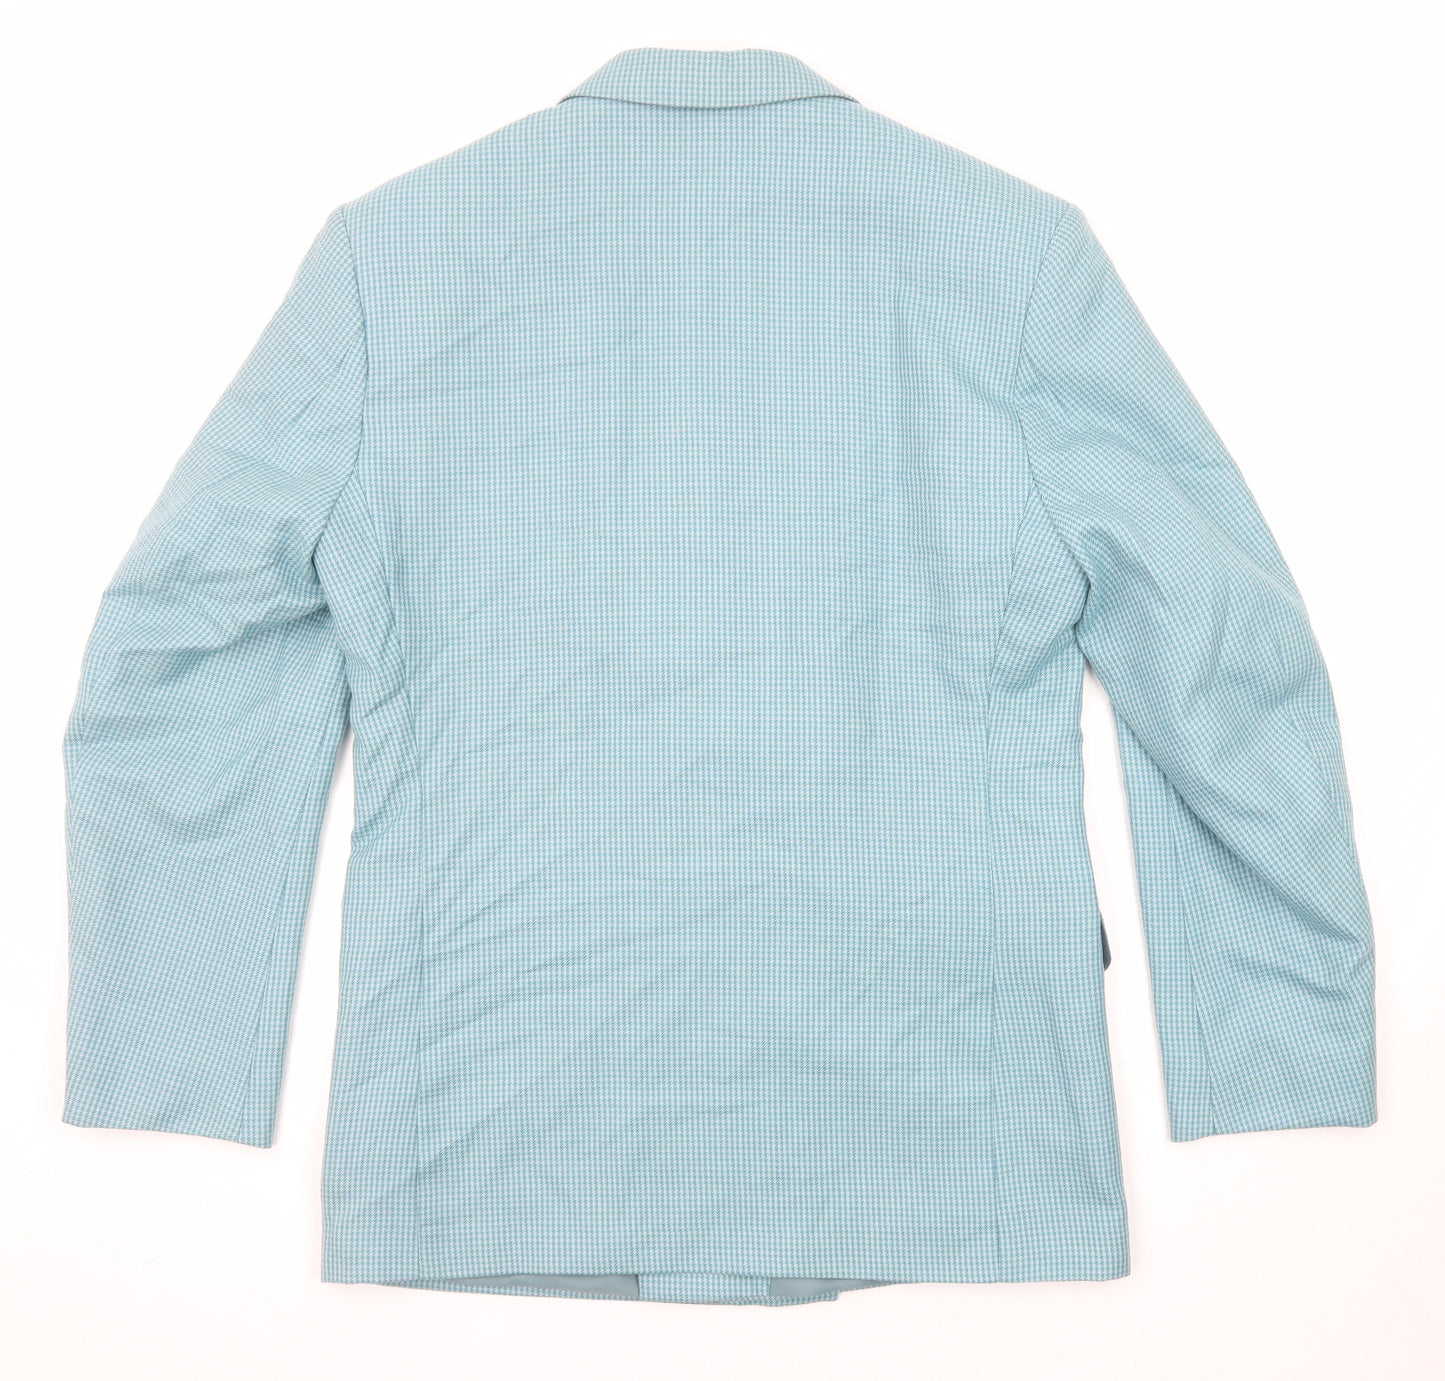 Calverley Mens Blue Wool Jacket Suit Jacket Size 38 Regular